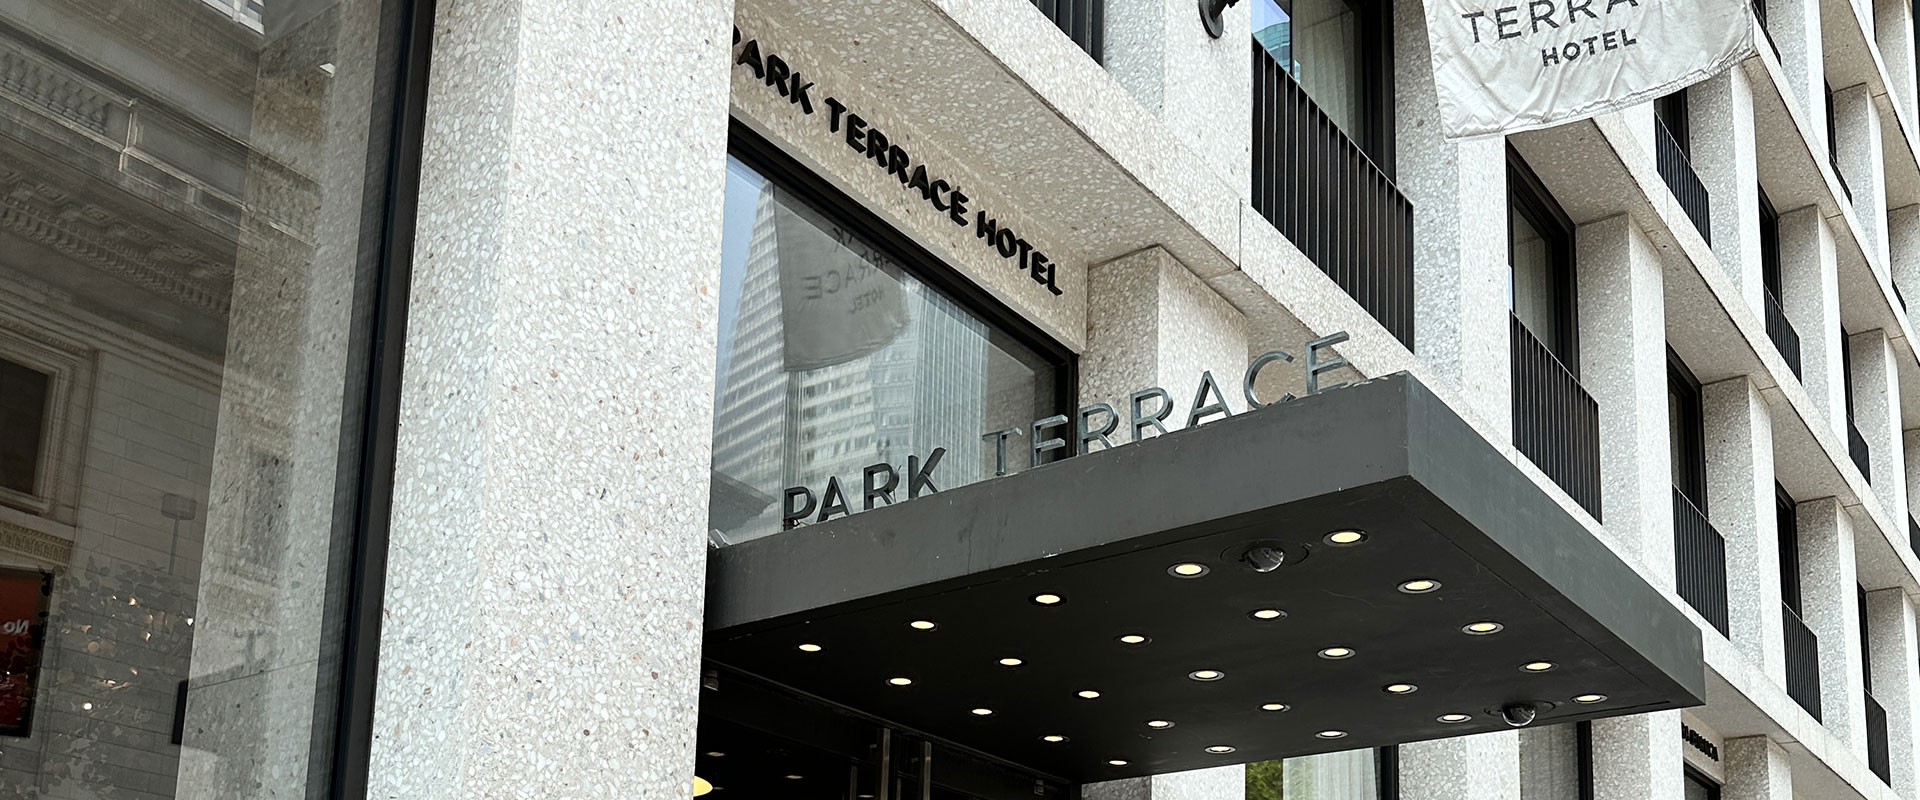 Park-Terrace-Hotel_4